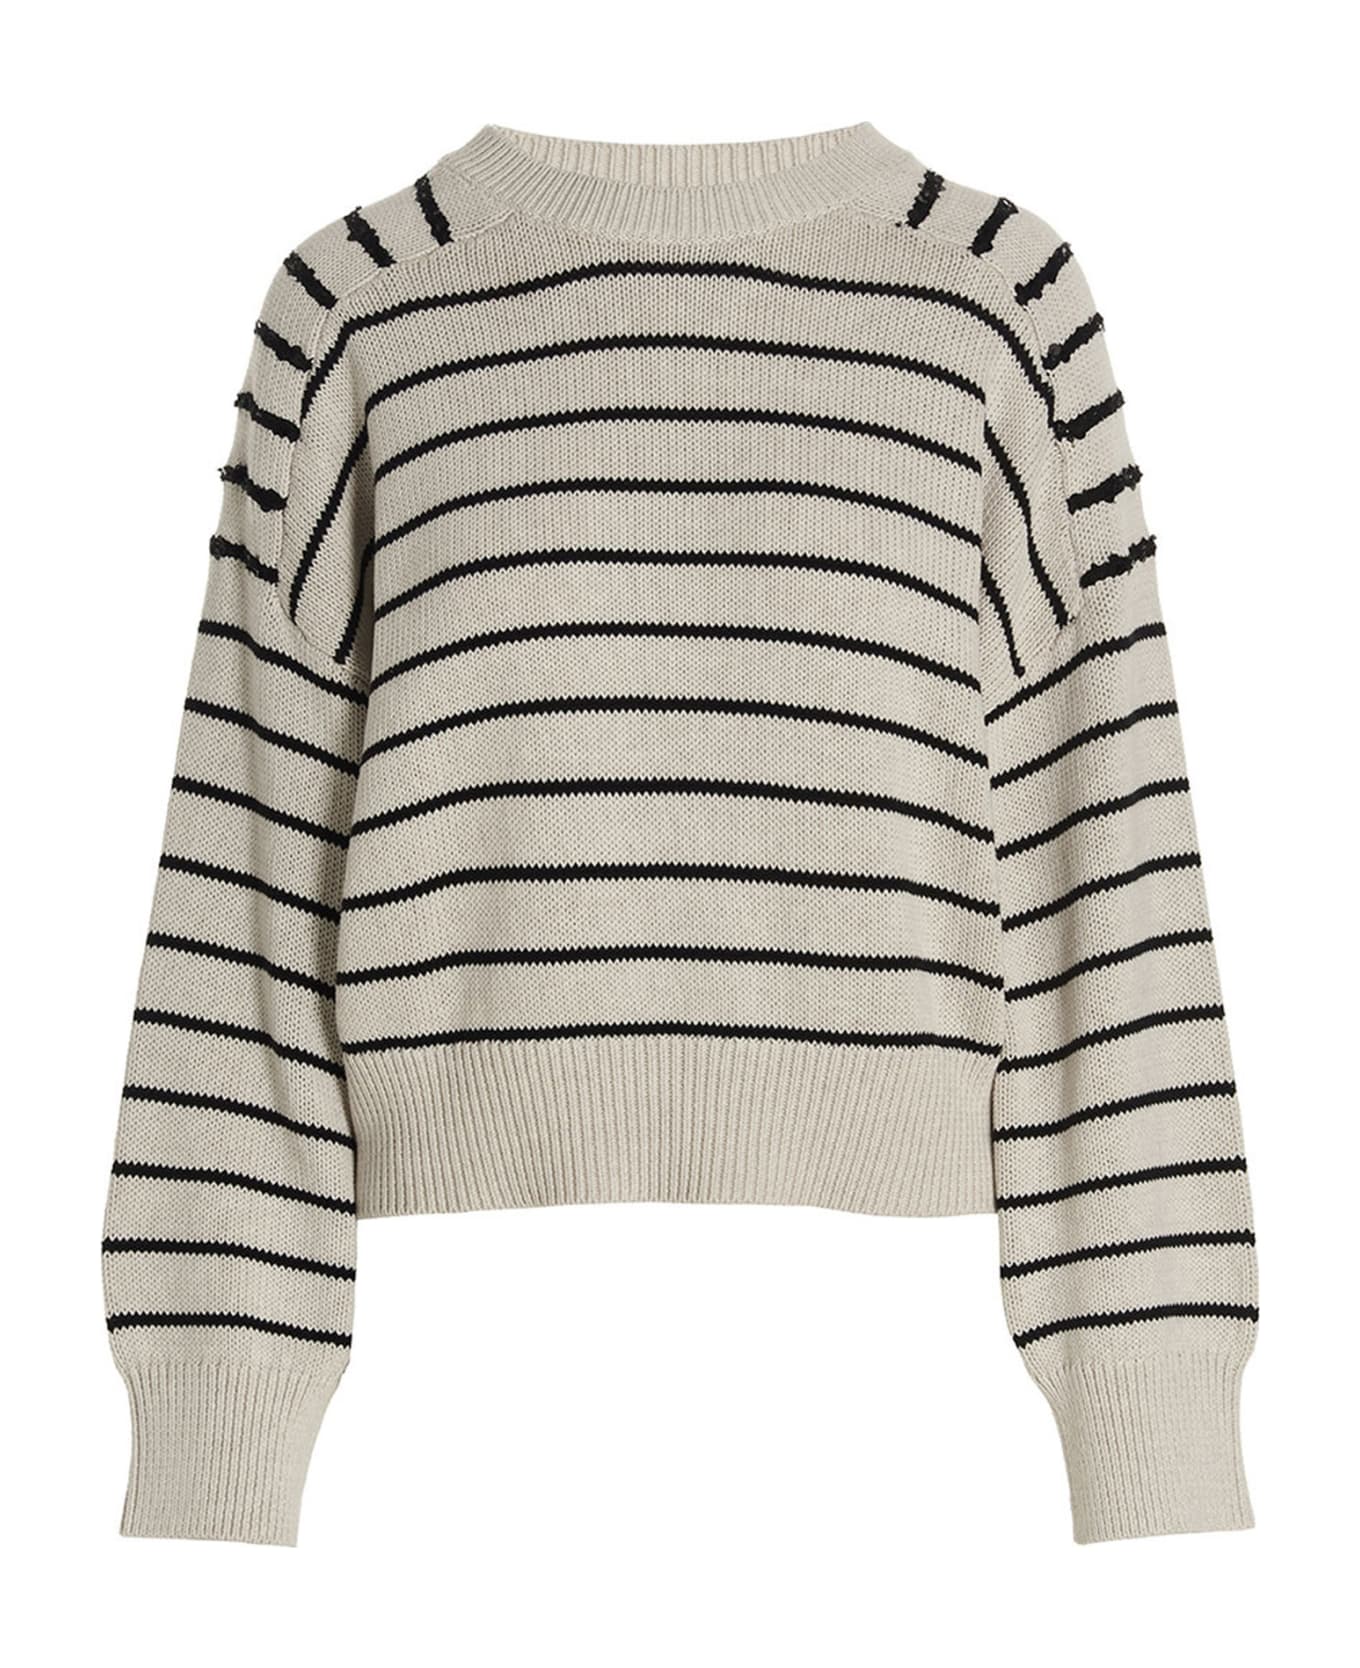 Brunello Cucinelli Striped Sweater - Beige